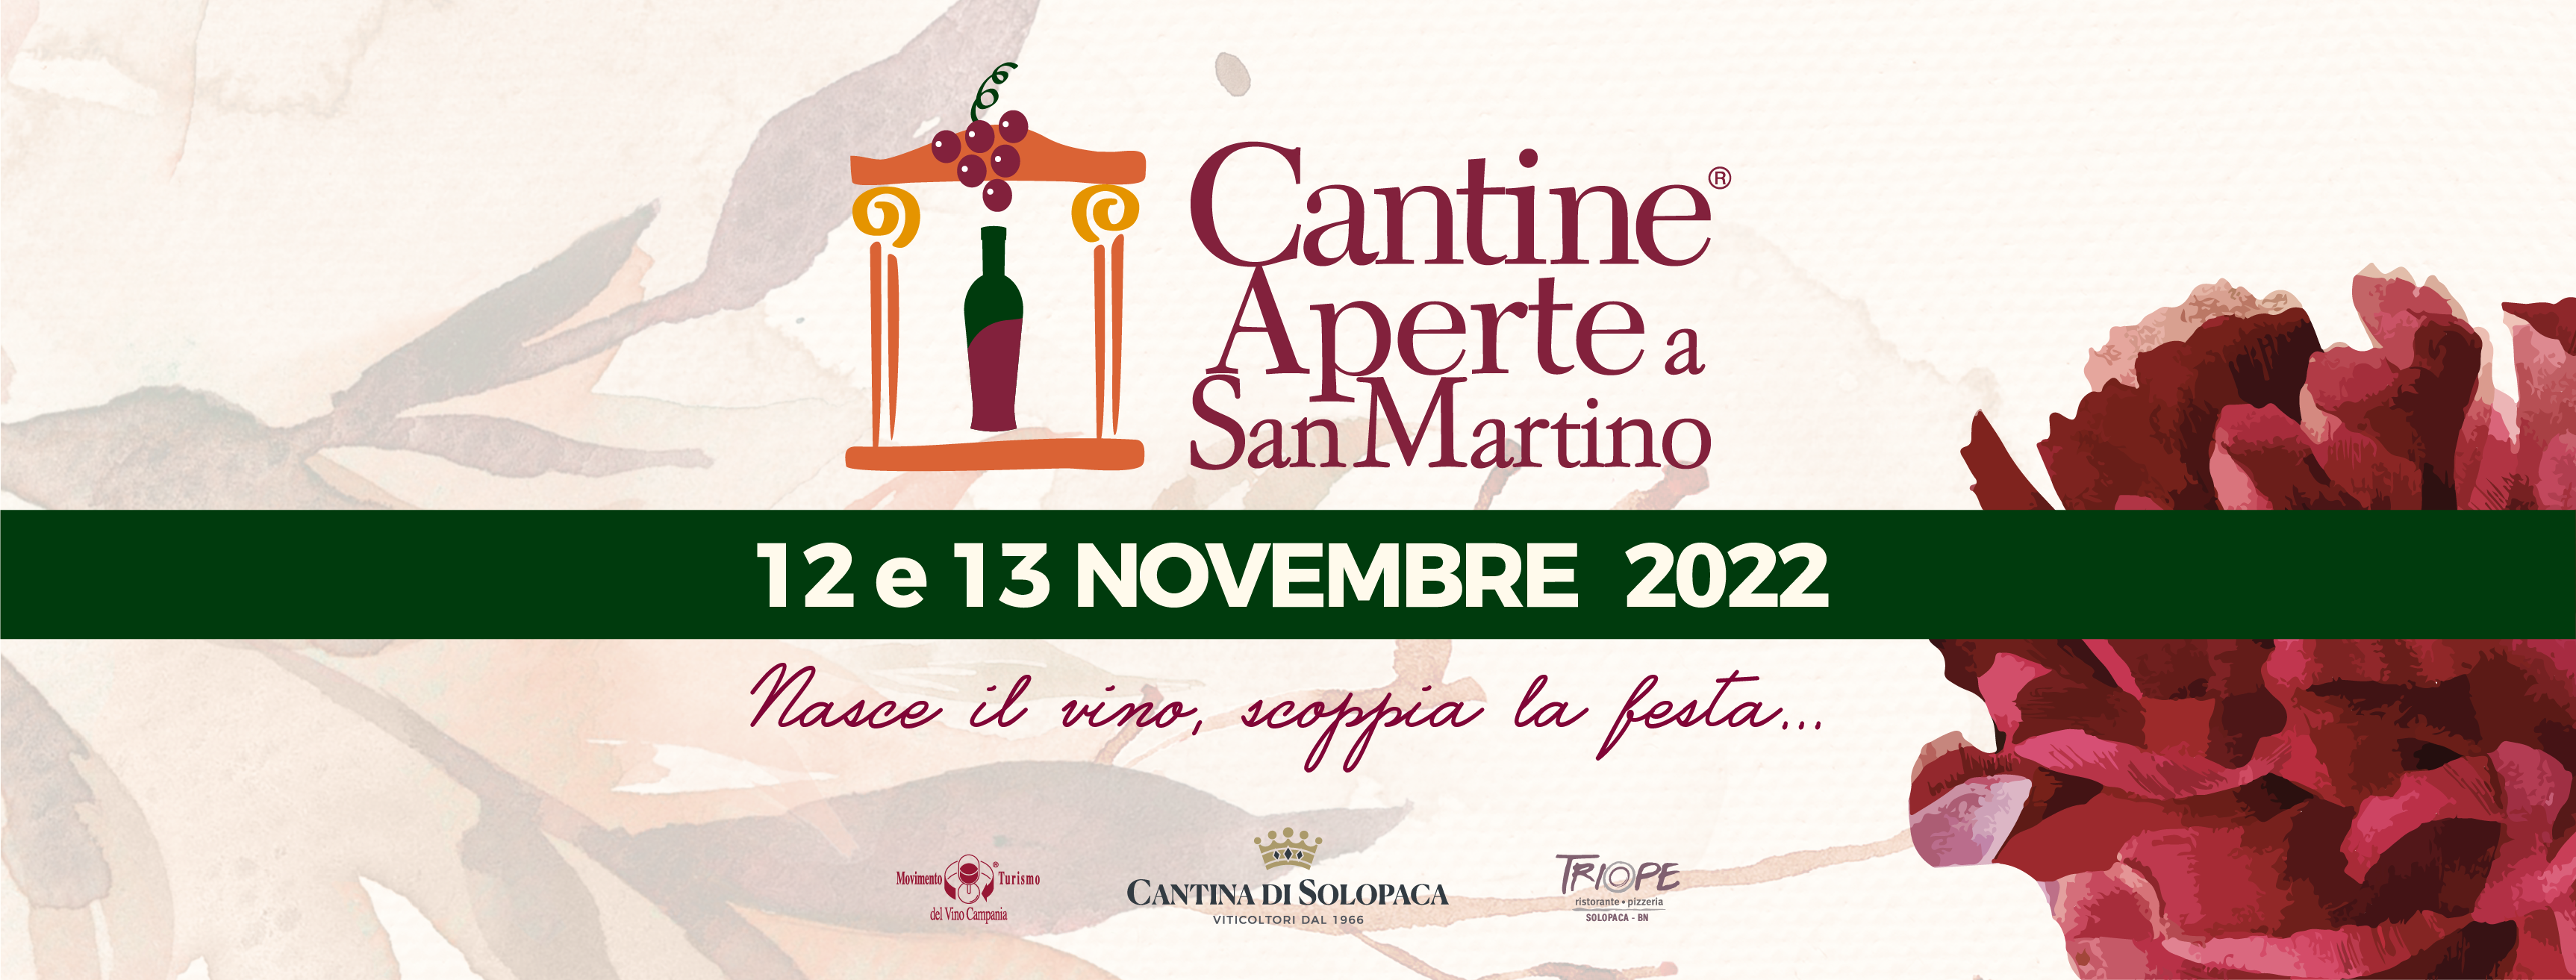 Cantine Aperte a San Martino 12 e 13 Novembre 2022